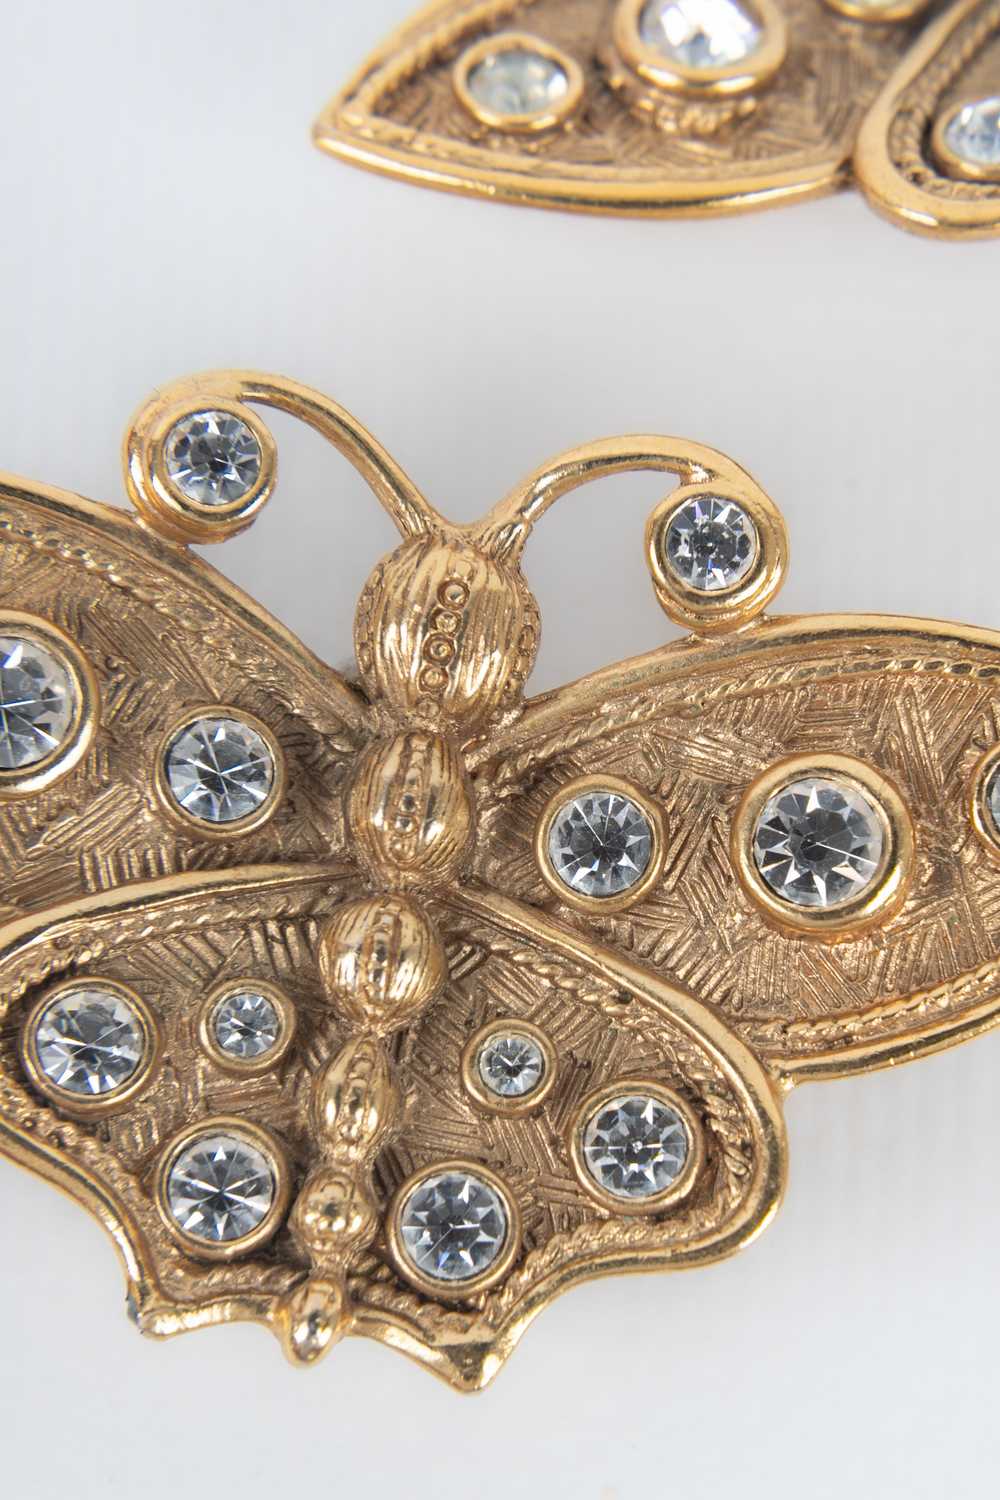 Christian Dior "Butterflies" earrings - image 5